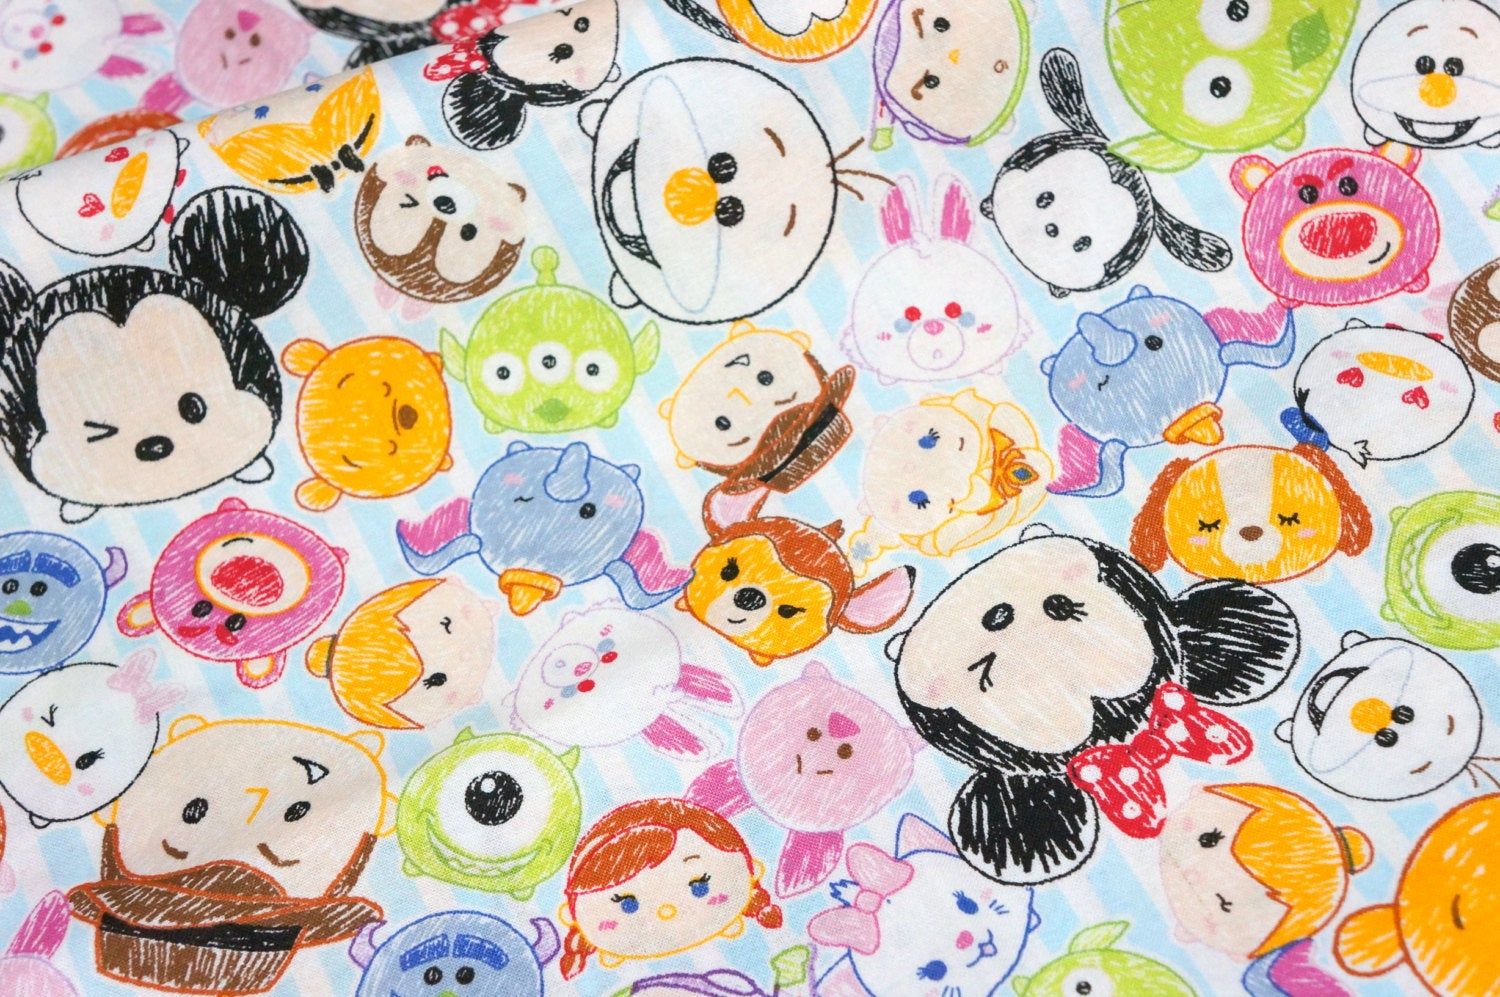 Tsum Wallpaper. Disney Tsum Tsum Wallpaper, Toy Story Tsum Tsum Wallpaper and Olaf Tsum Tsum Wallpaper